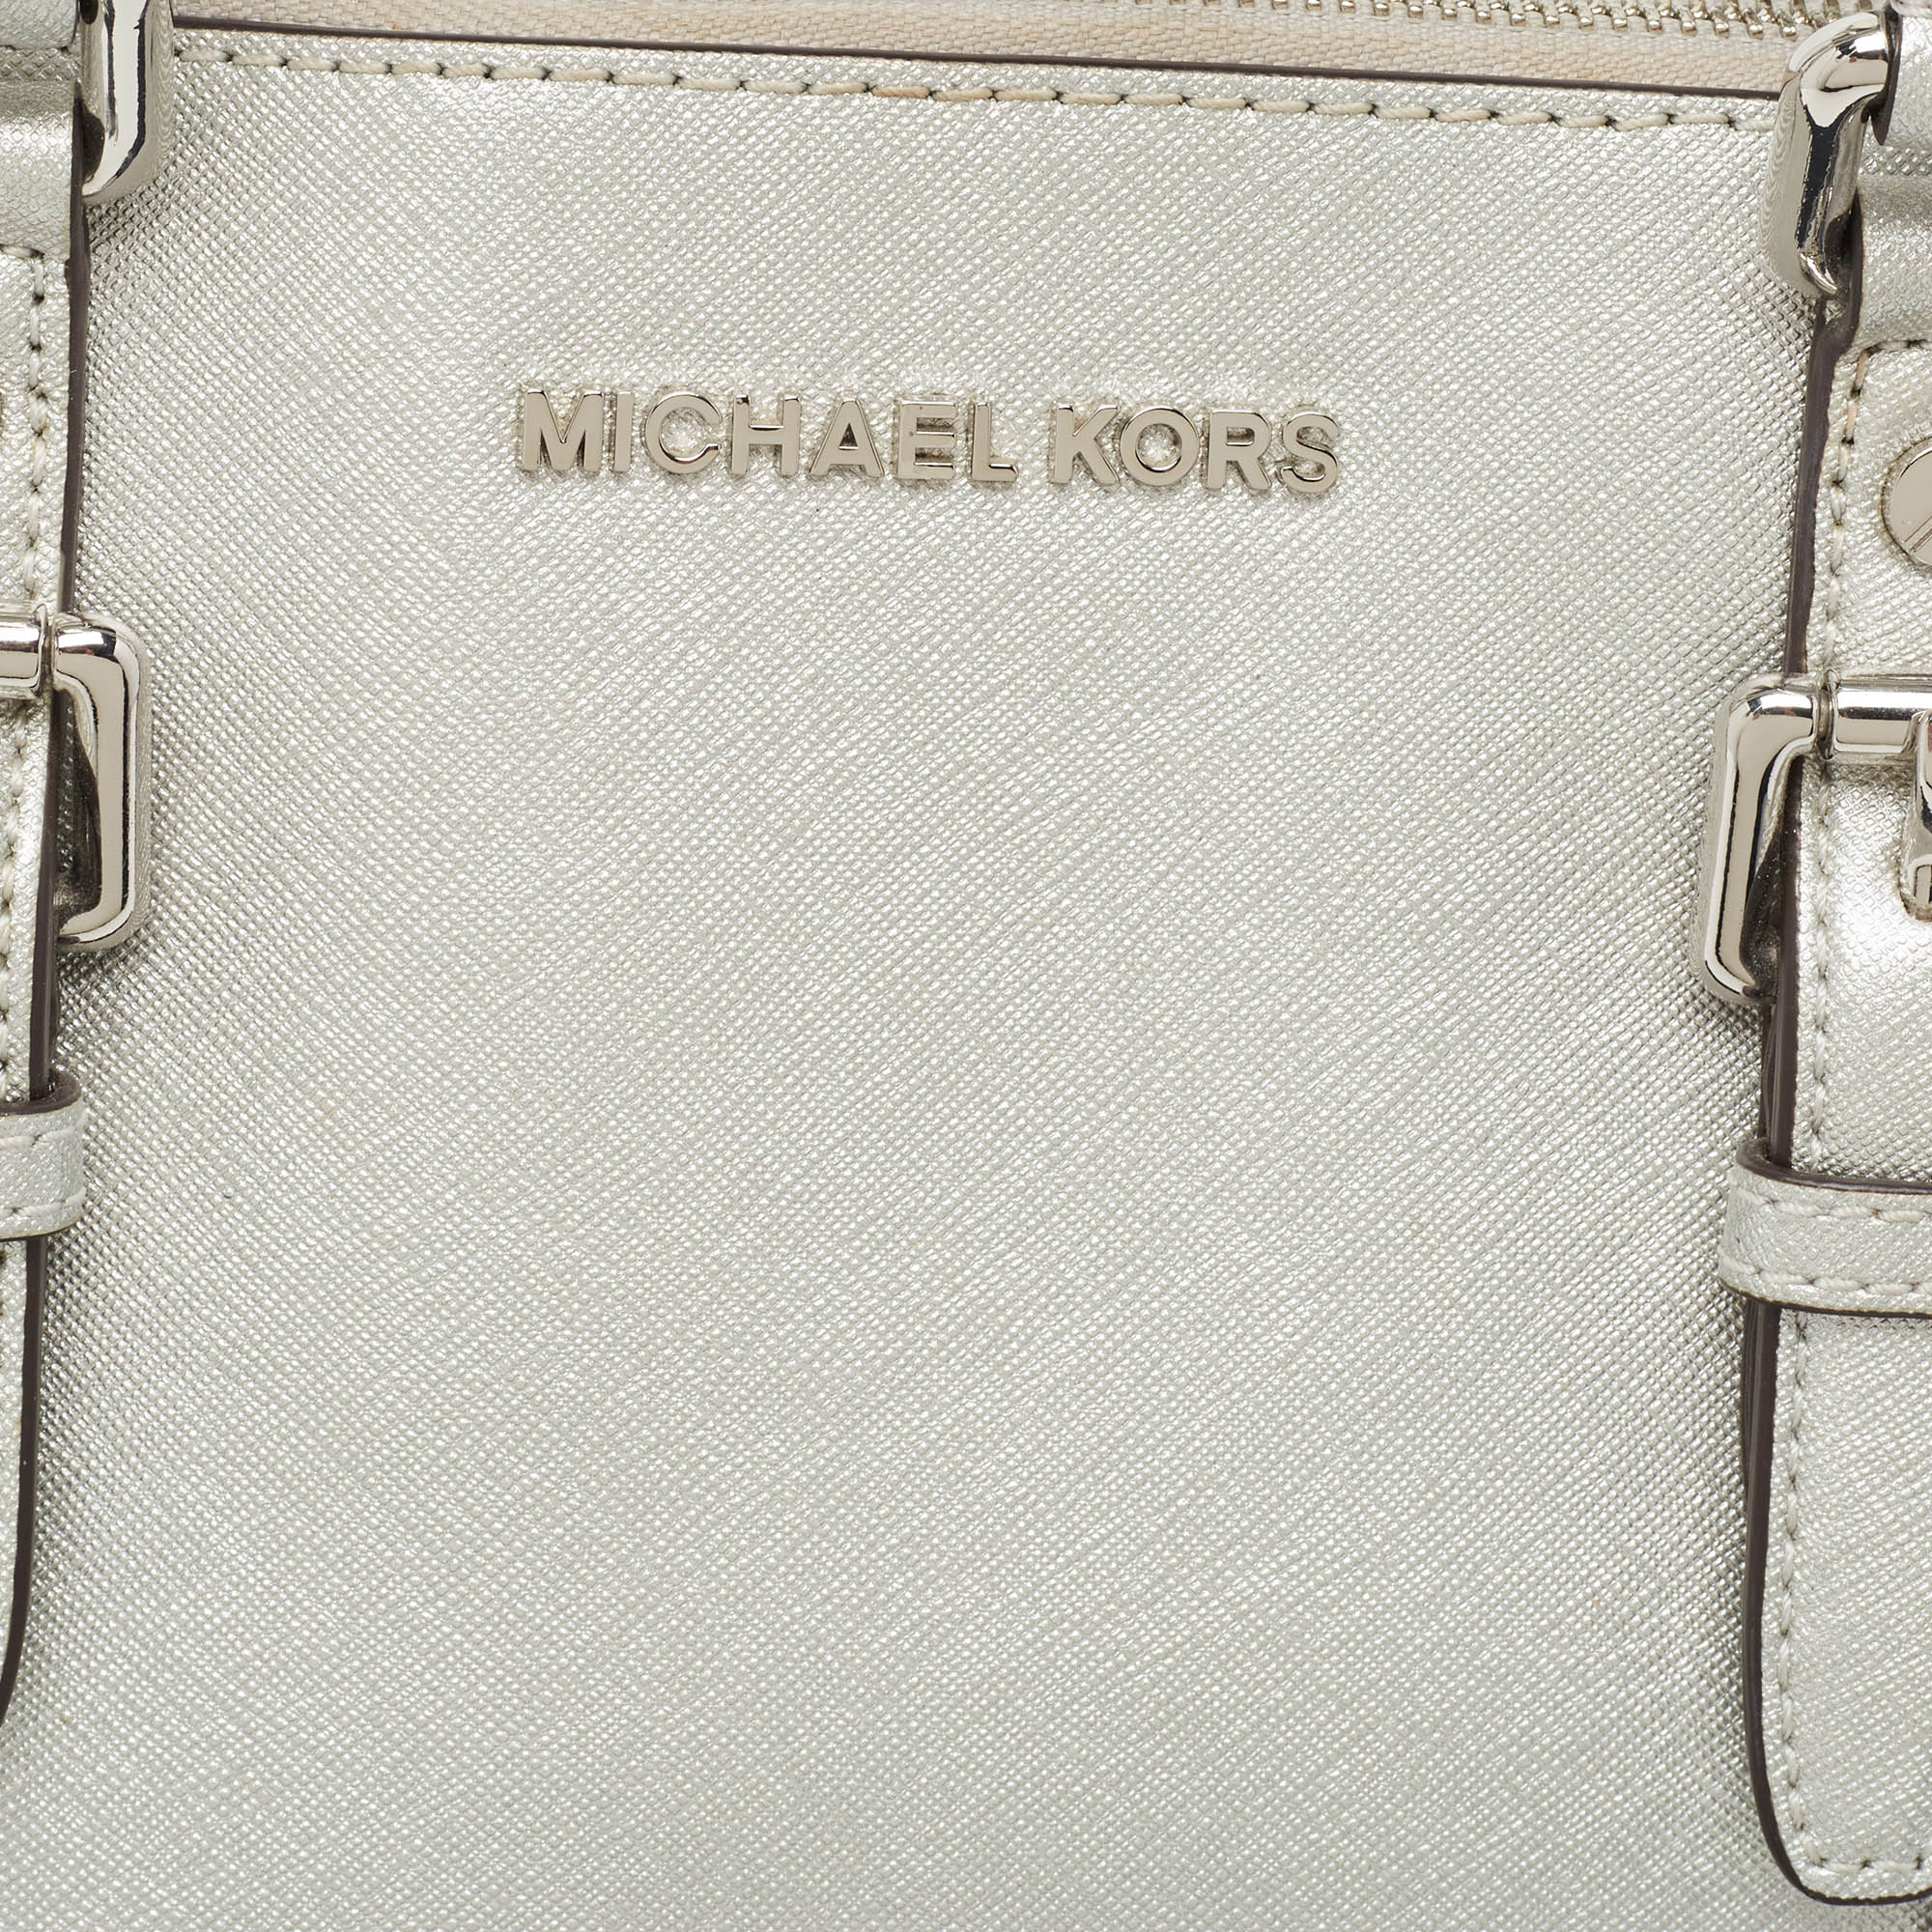 MICHAEL Michael Kors Silver Leather Large Ciara Satchel